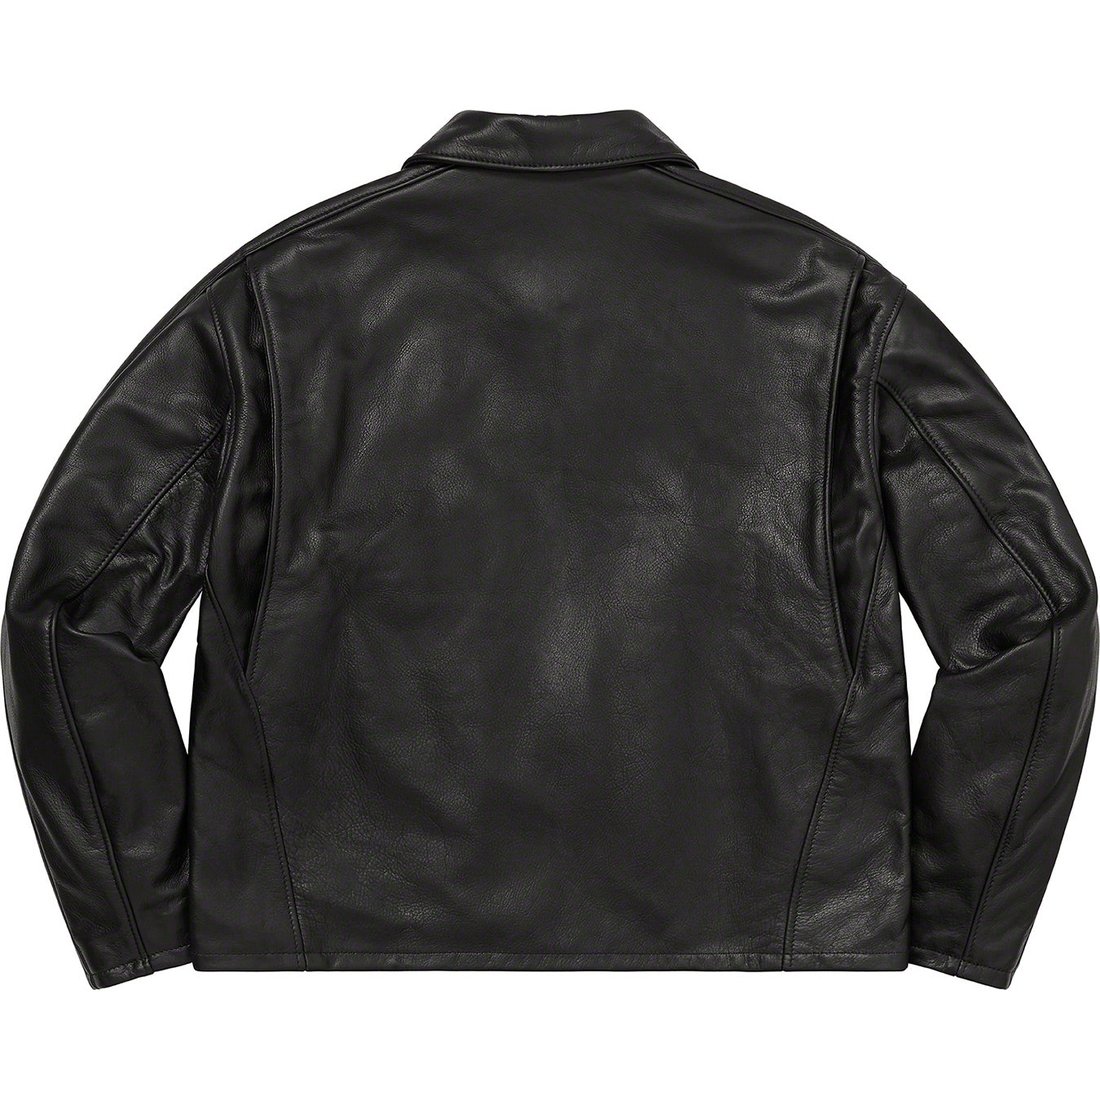 Details on Supreme Schott Leather Racer Jacket Black from spring summer 2023 (Price is $798)